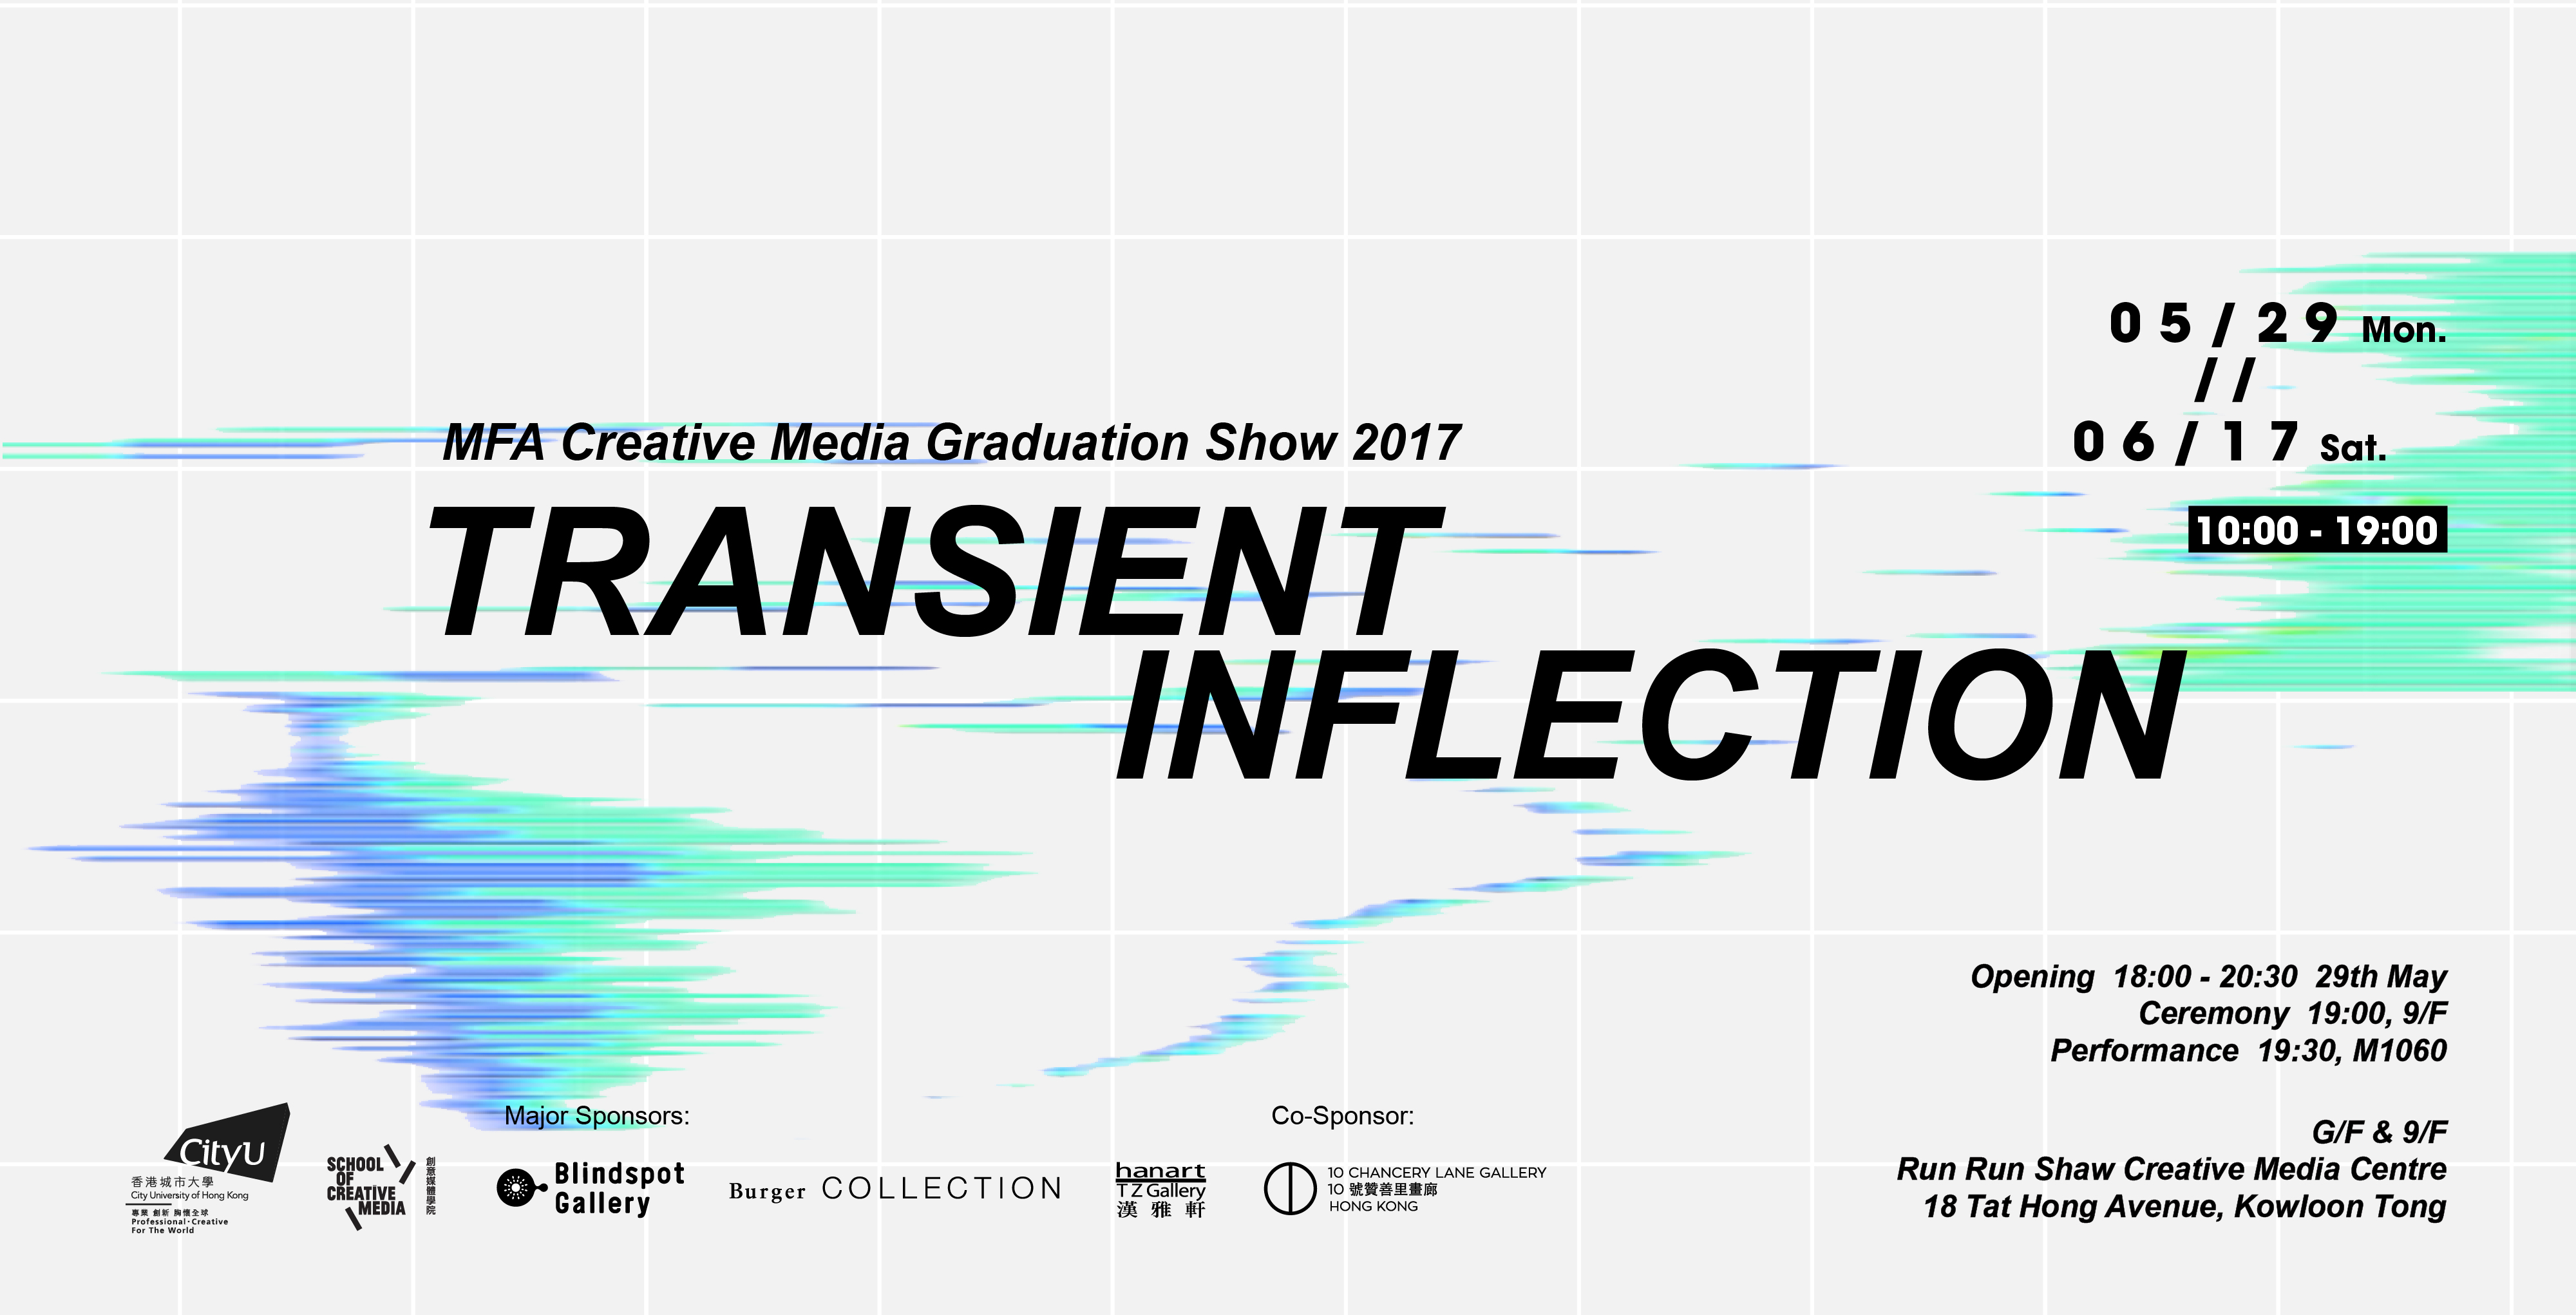 MFA Creative Media Graduation Show 2017